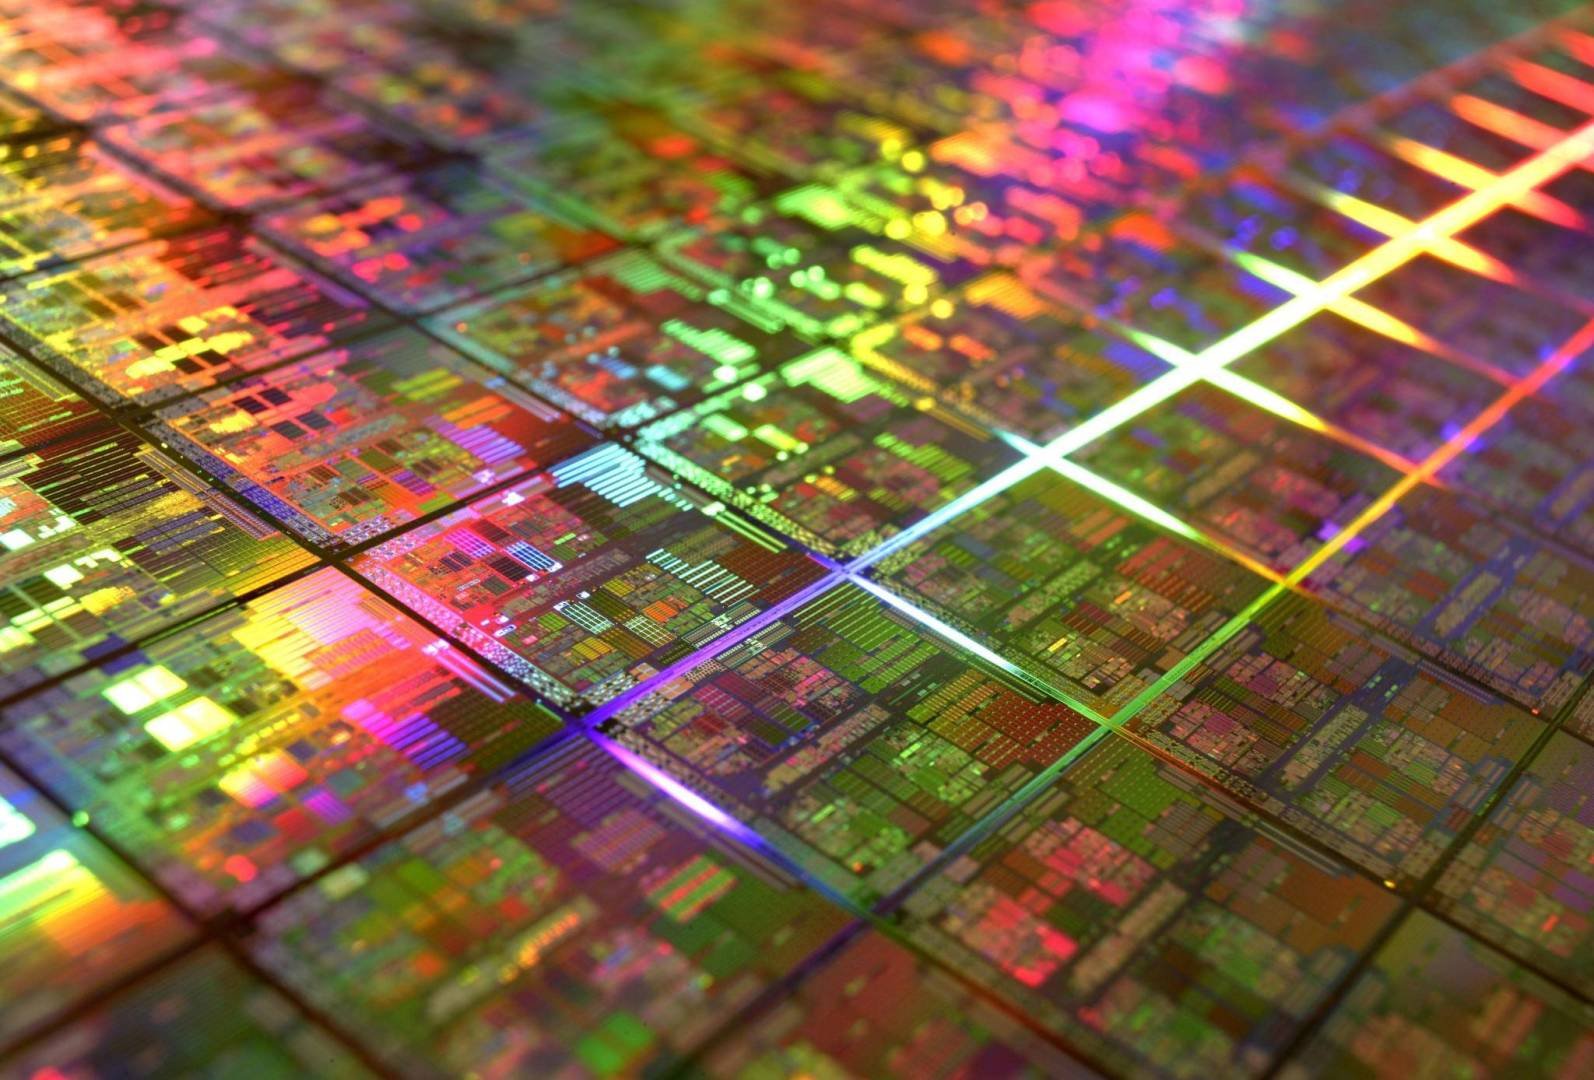 Immagine di Carenza di semiconduttori: i produttori di chip iniziano ad aumentare i prezzi